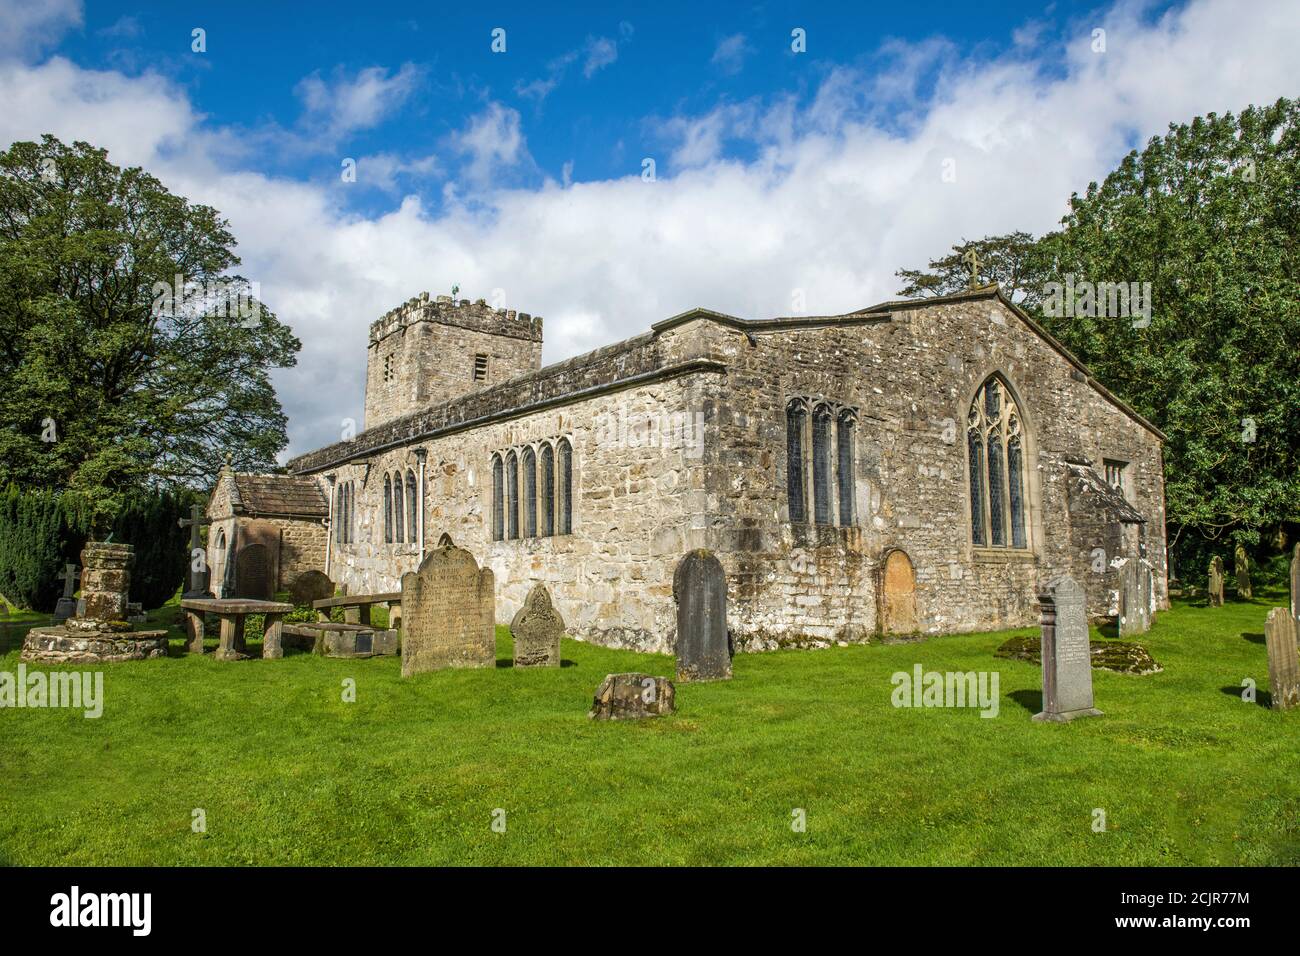 Die Kirche St. Michael und alle Engel in der Nähe des Flusses Wharfe in Hubberholme, Upper Wharfedale, im Yorkshire Dales National Park. Stockfoto